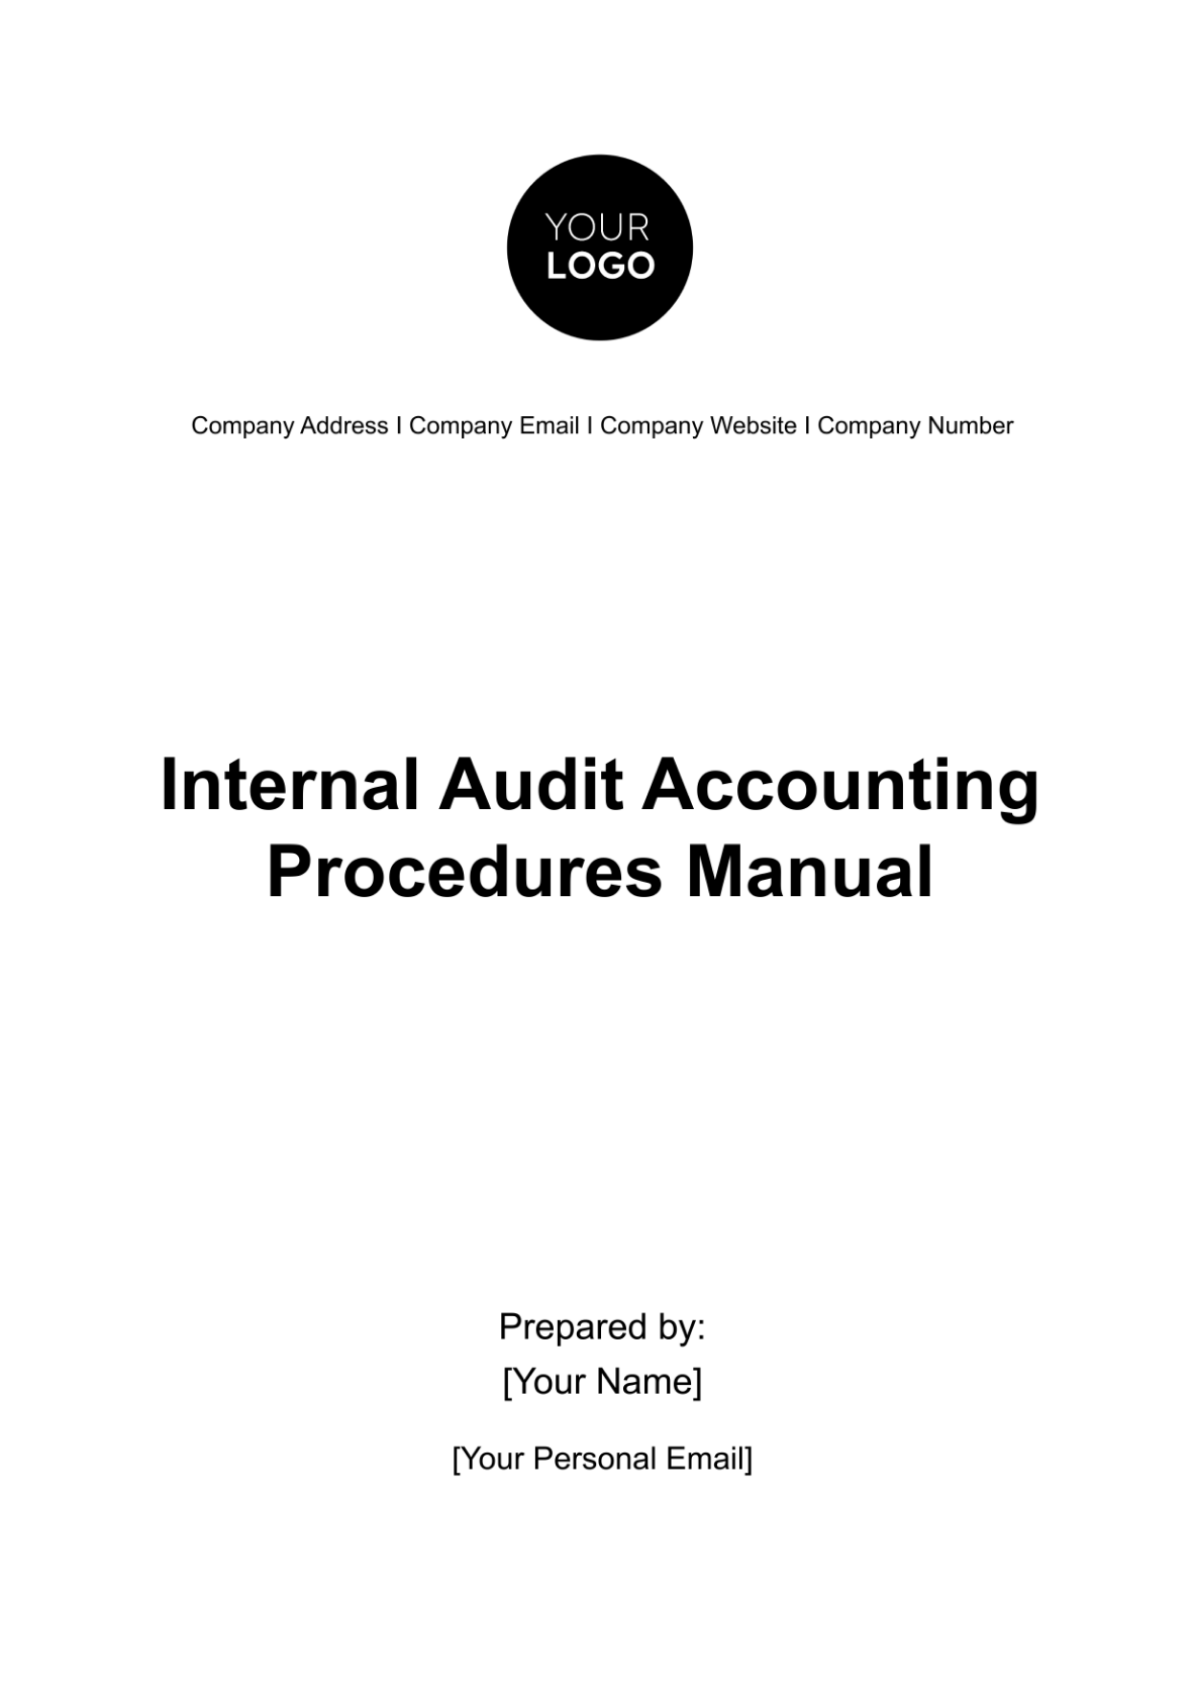 Internal Audit Accounting Procedures Manual Template